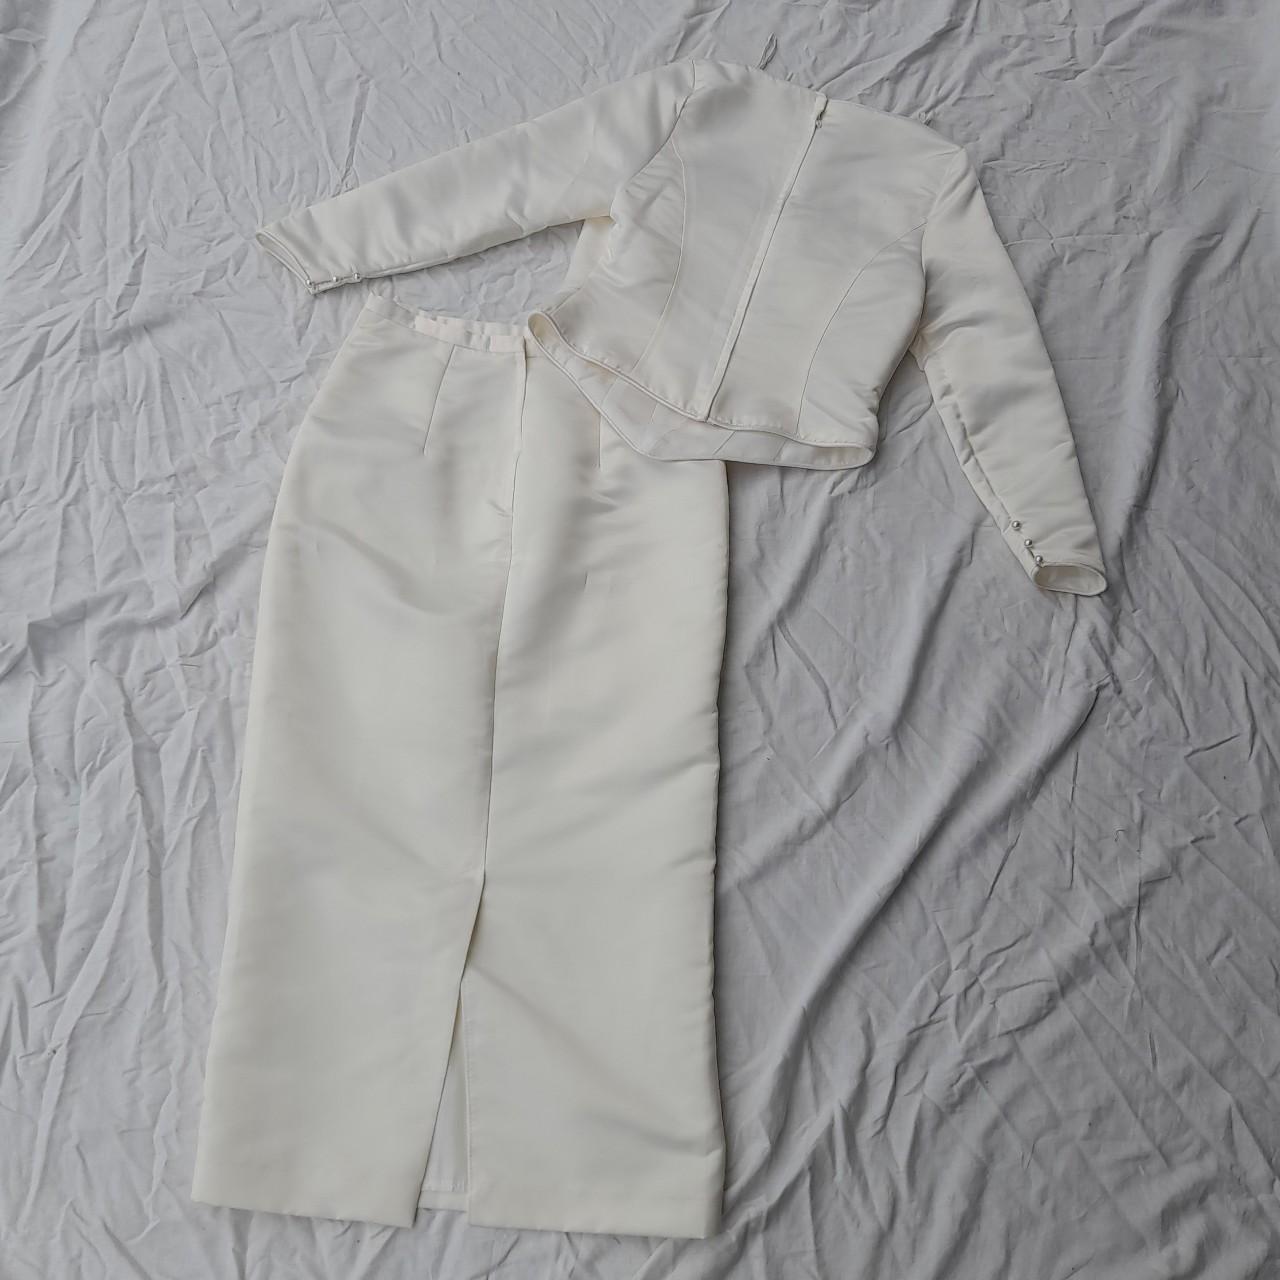 Vintage 80s 1987 white satin wedding suit set by Liz... - Depop